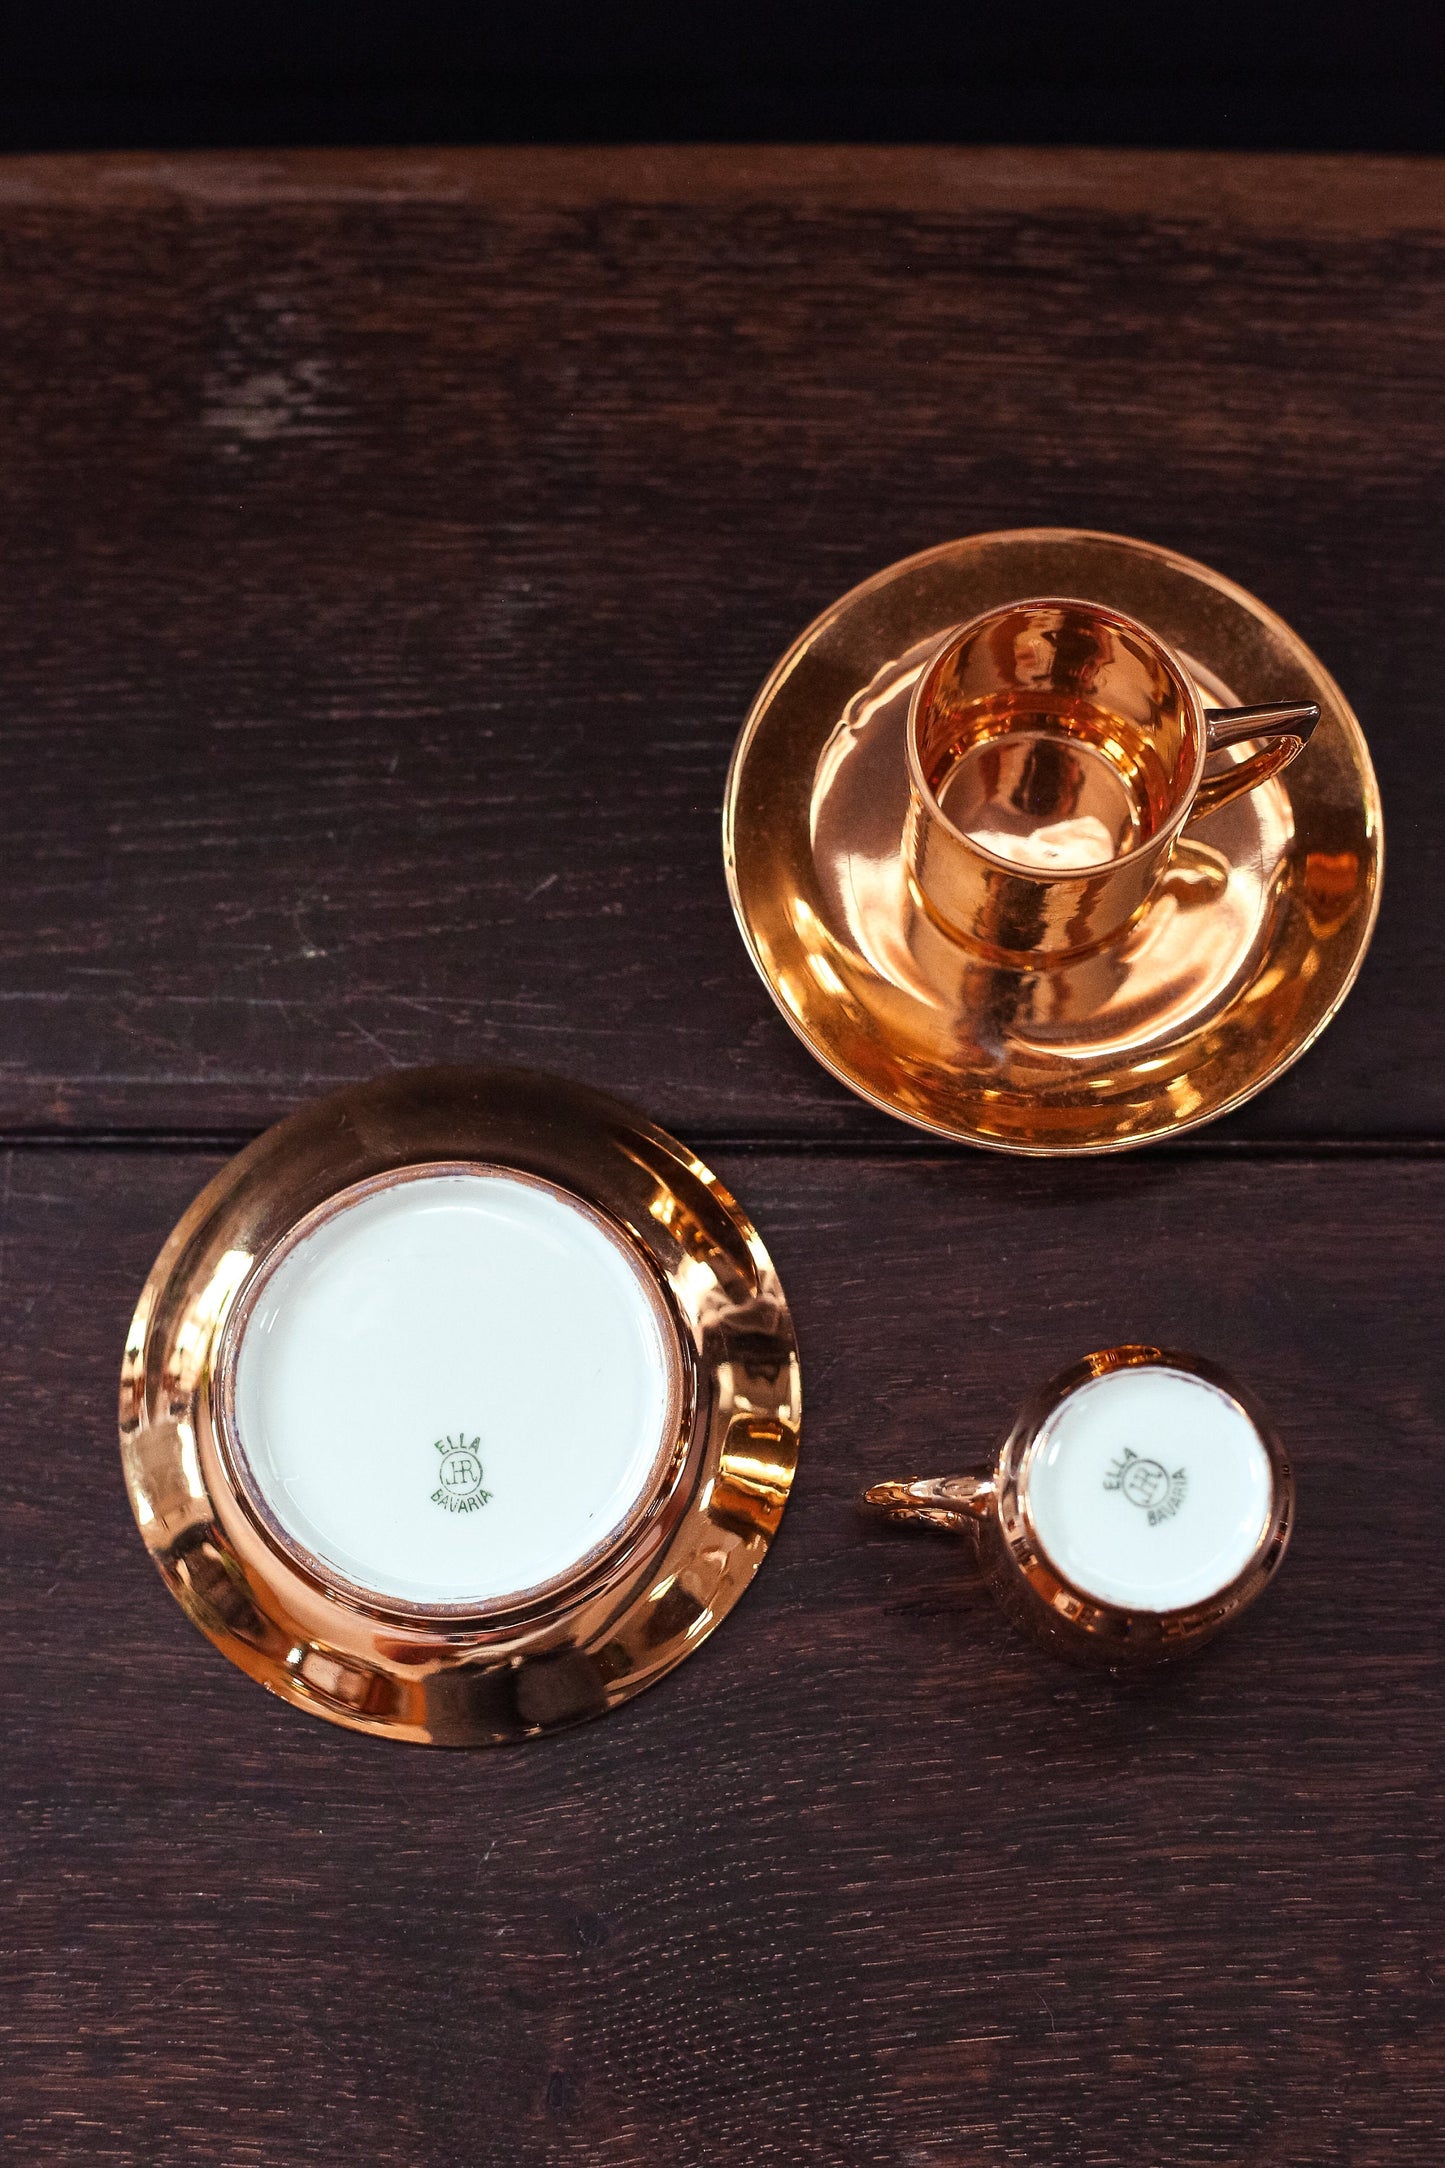 White and Gold Cup Saucer Sets - Vintage Porcelain Tea cup sets